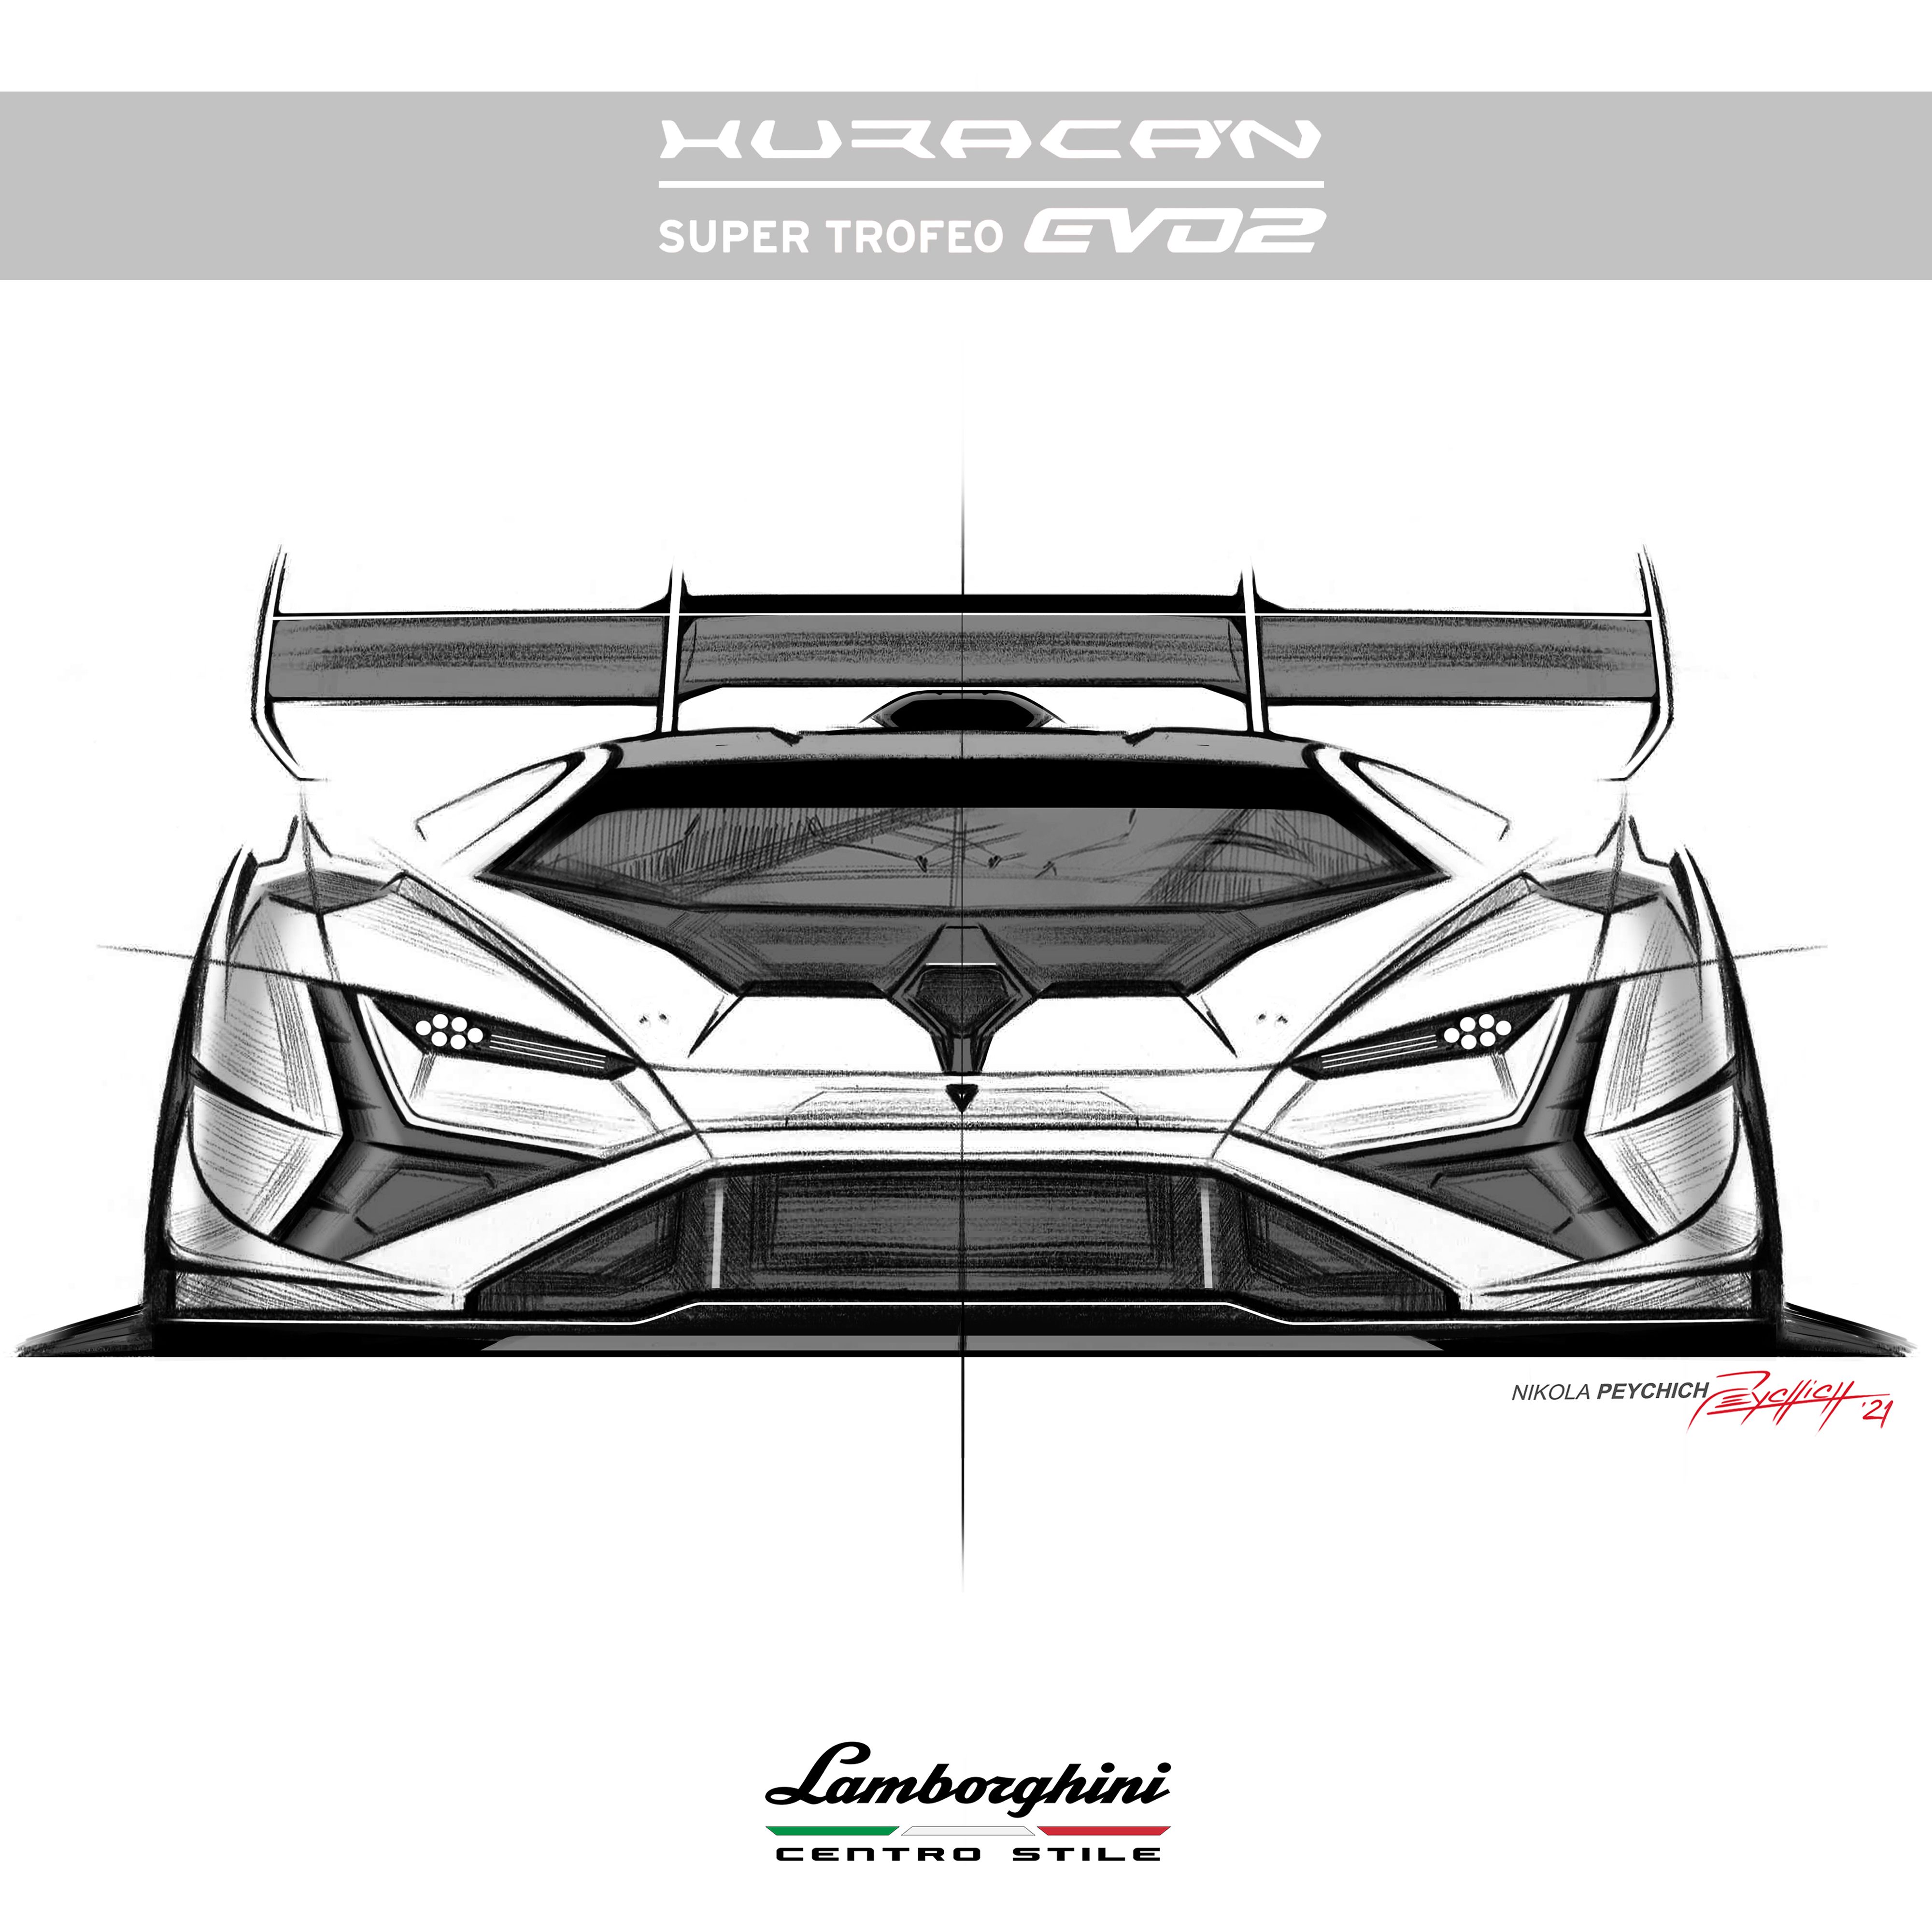 2022 Lamborghini Huracan Super Trofeo EVO2 - A New Look and Bigger Attitude